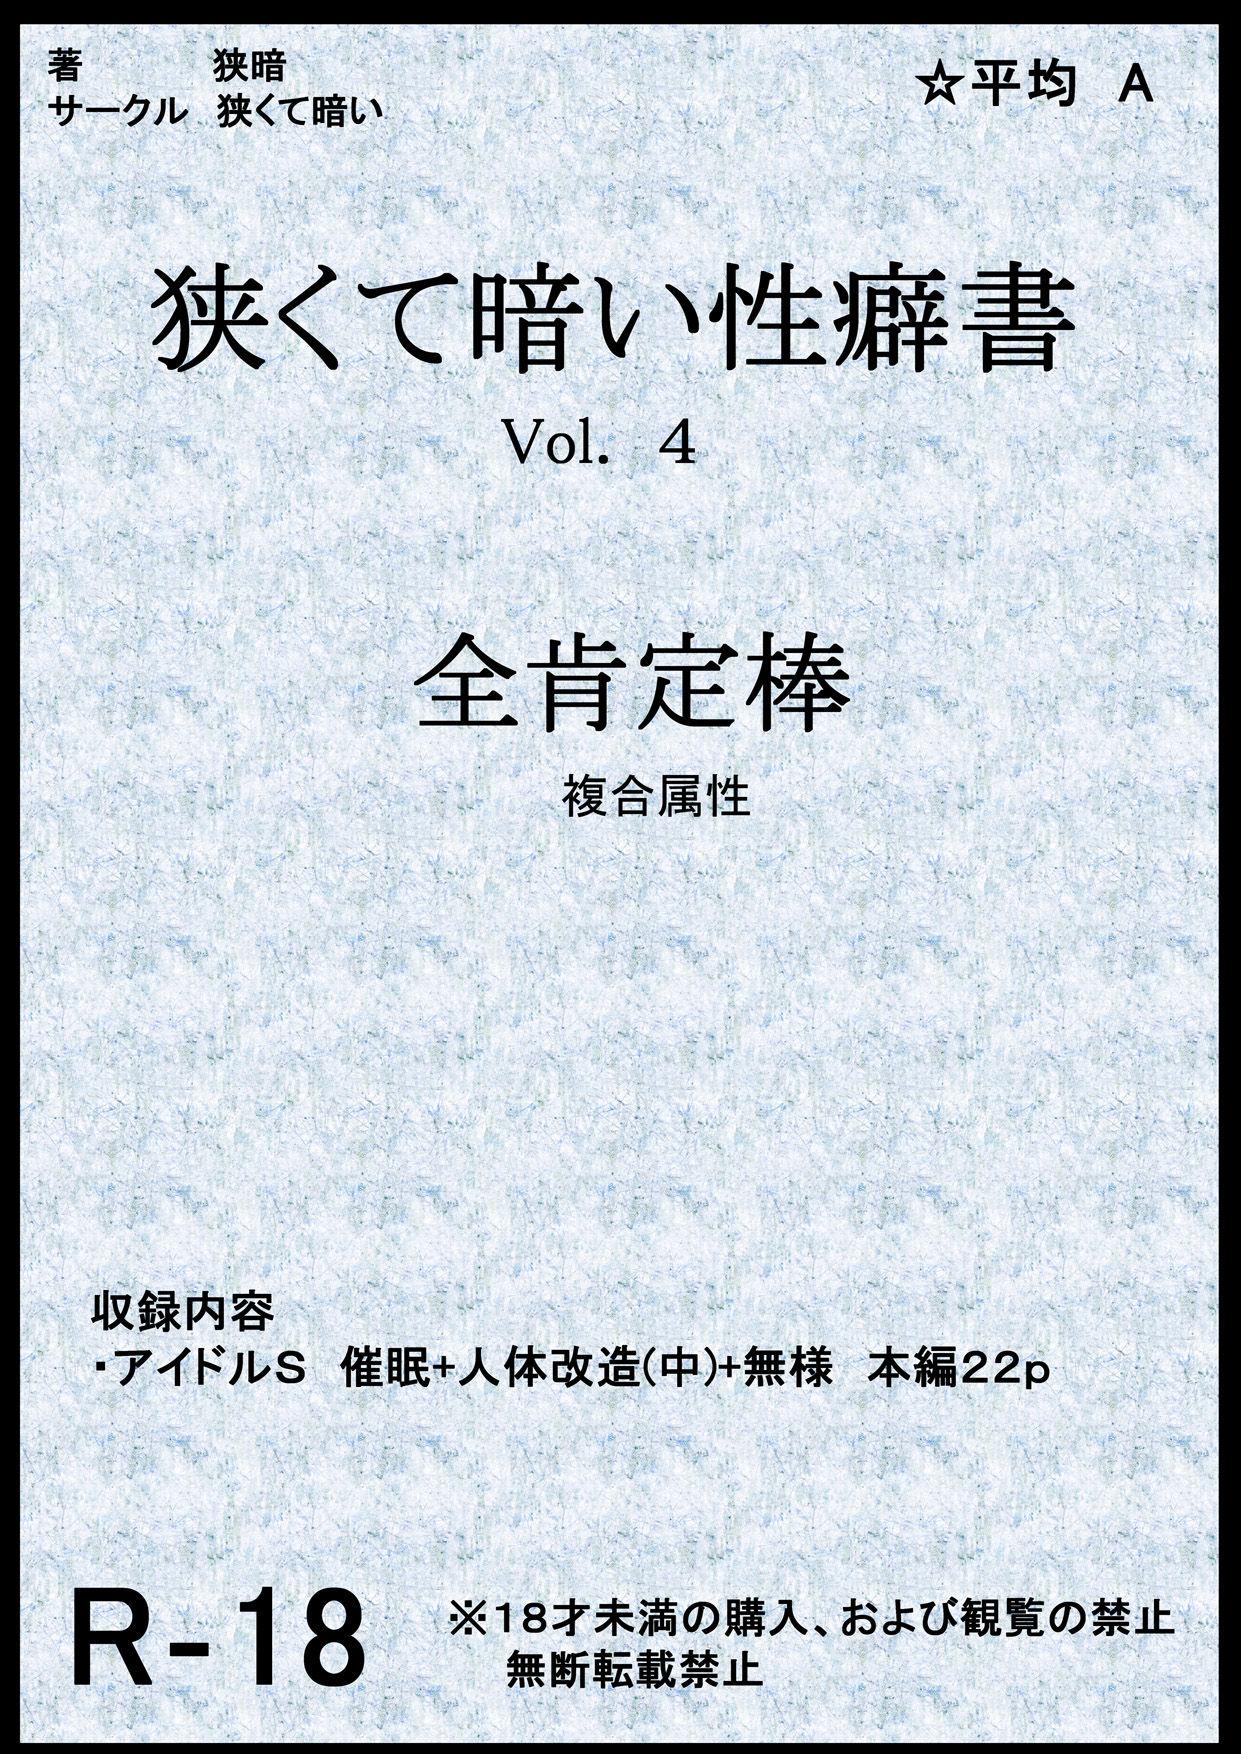 Reversecowgirl Semakute Kurai Vol. 4 Zenkouteibou - The idolmaster Climax - Page 1